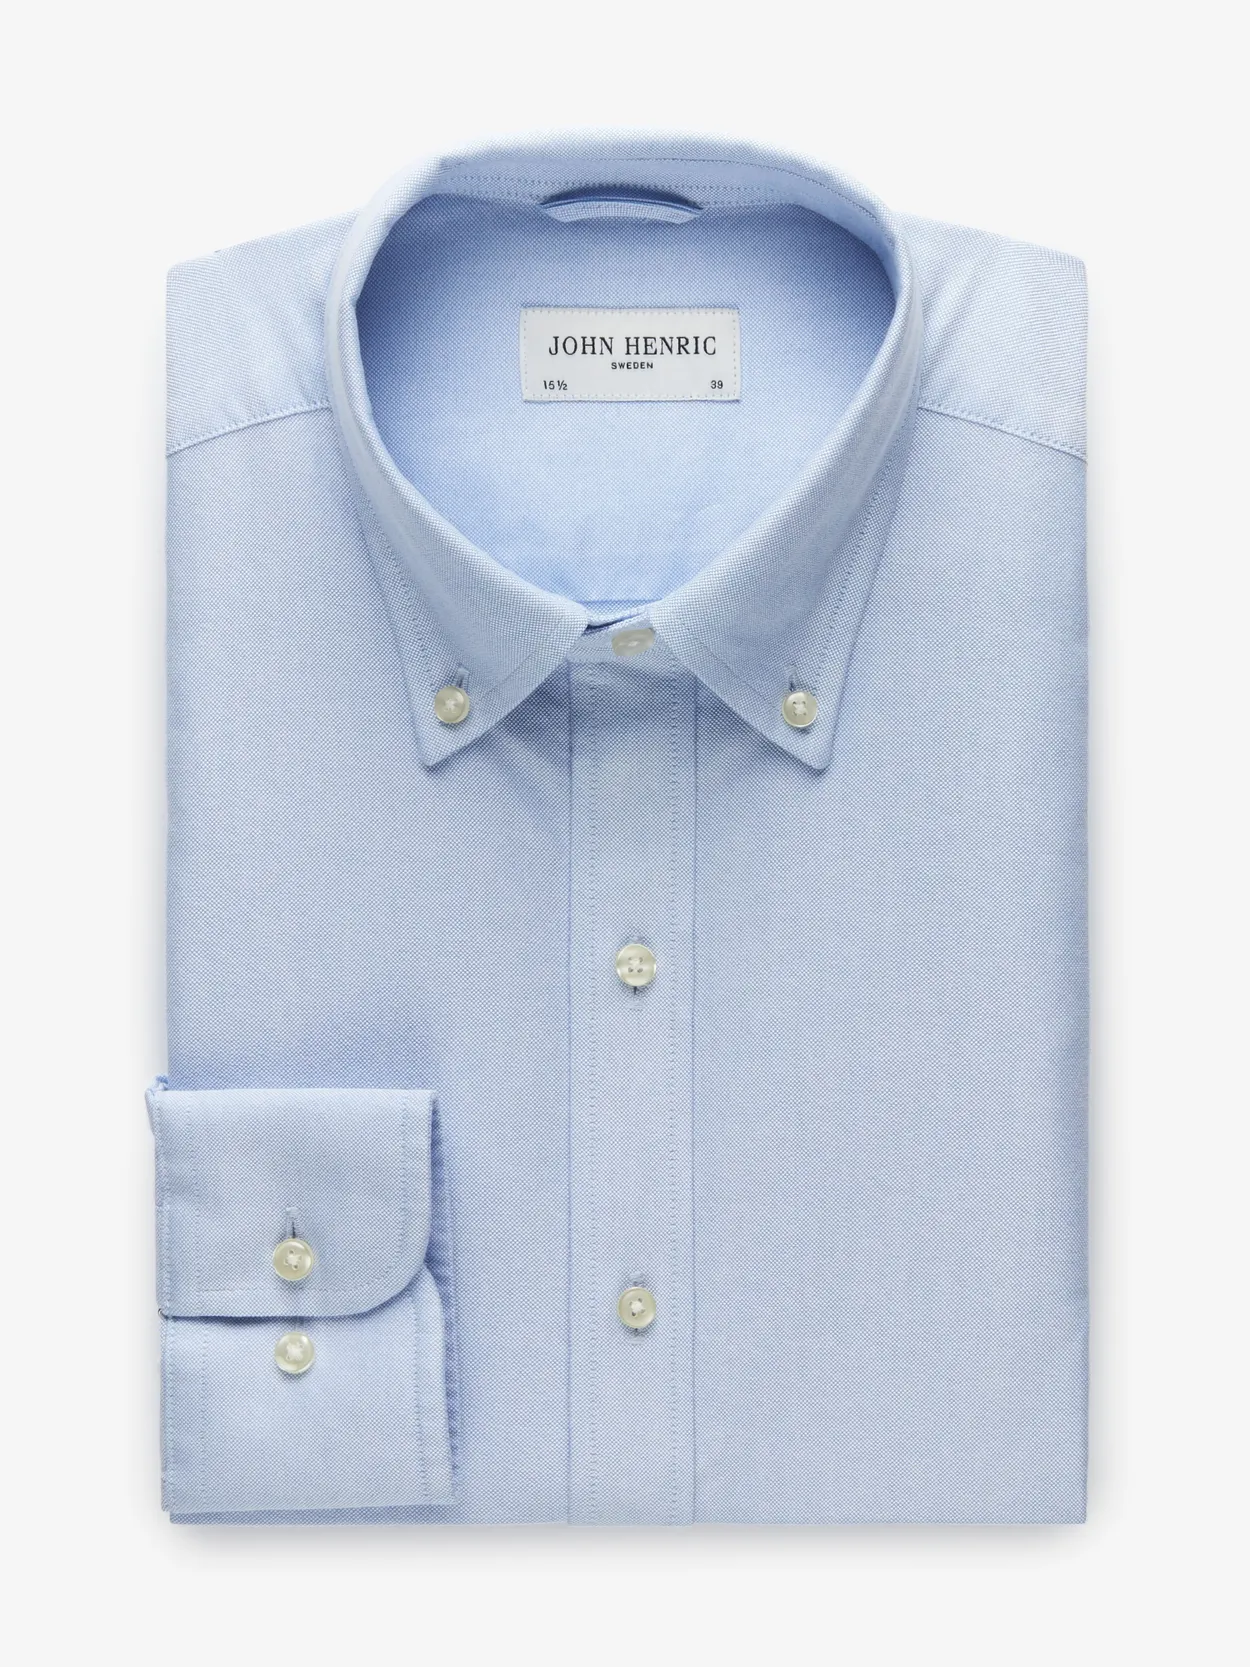 Oxford Shirt - Buy online